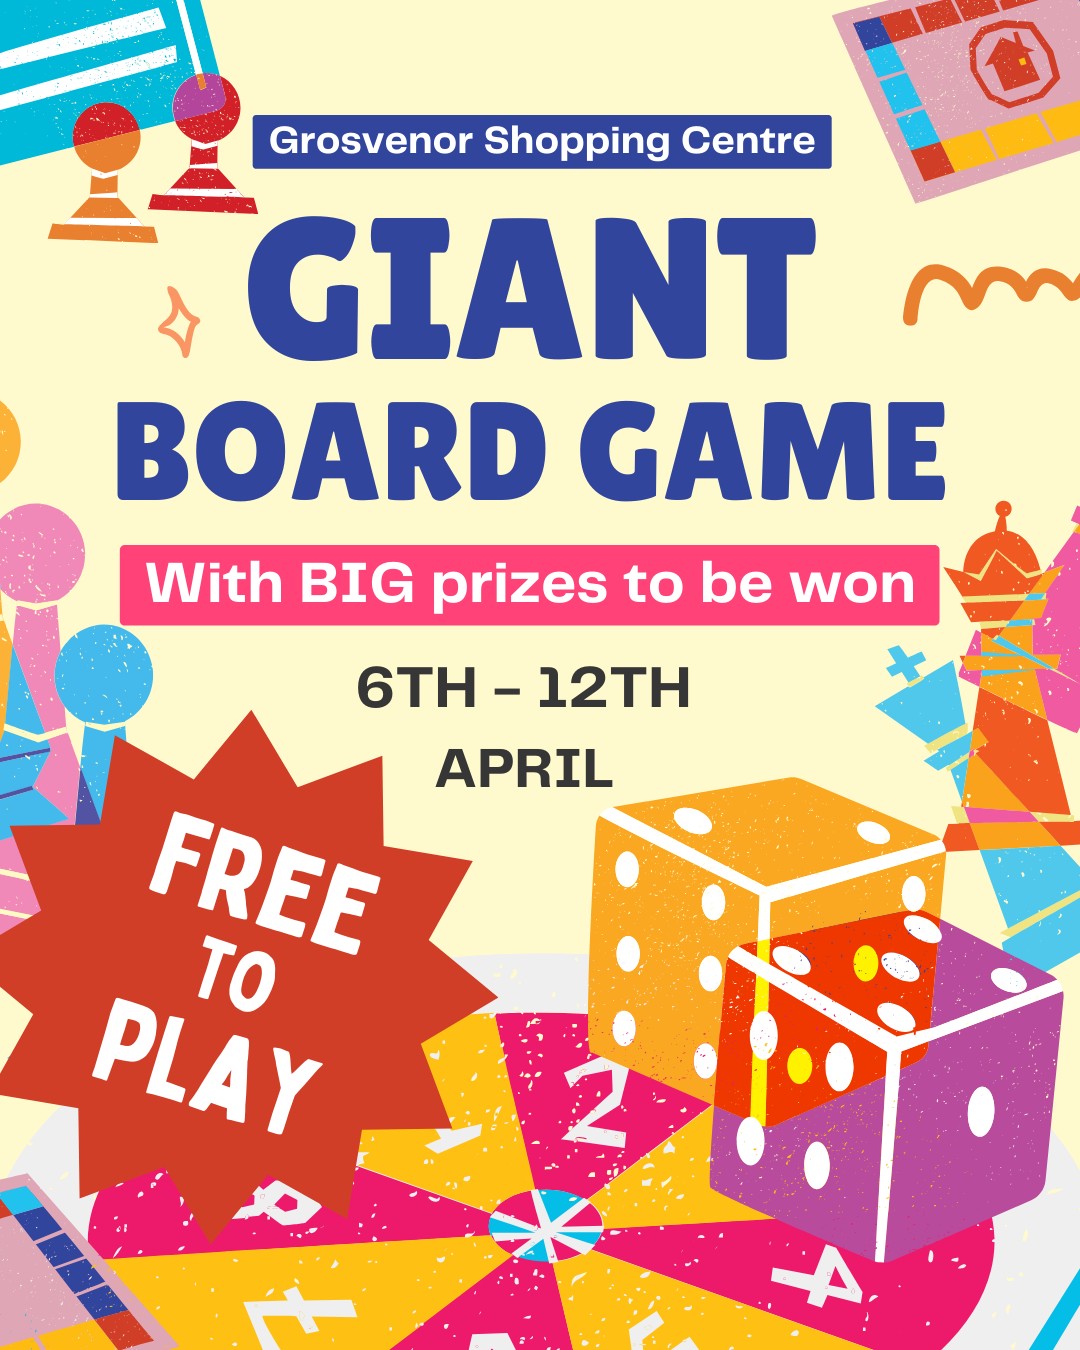 GIANT Board Game Grosvenor Shopping Centre